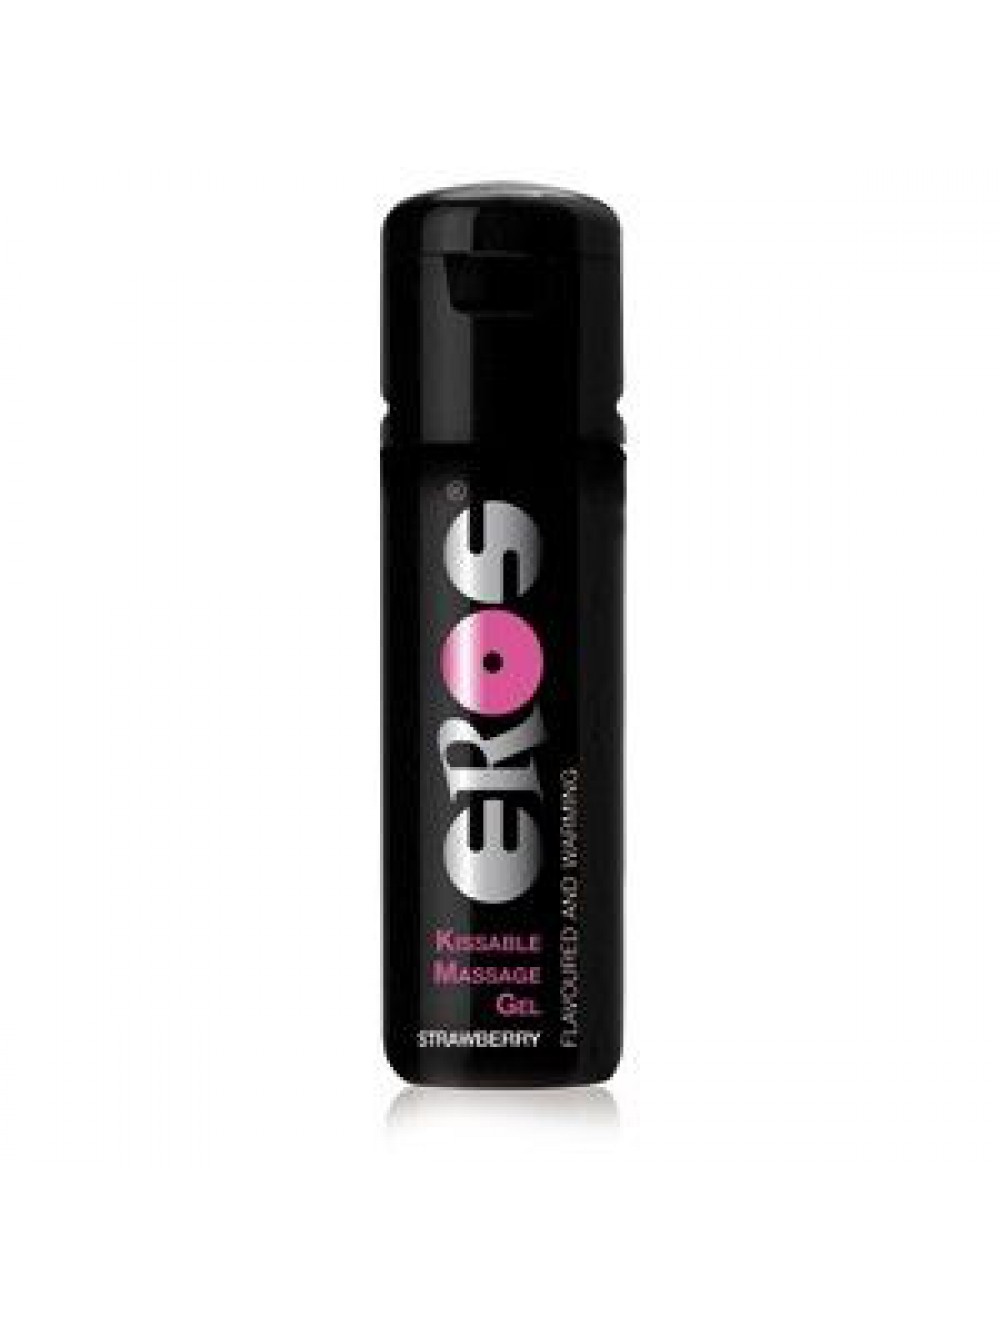 EROS Pleasure Kissable Massage Gel Warming - STRAWBERRY, 100 ml by Eros